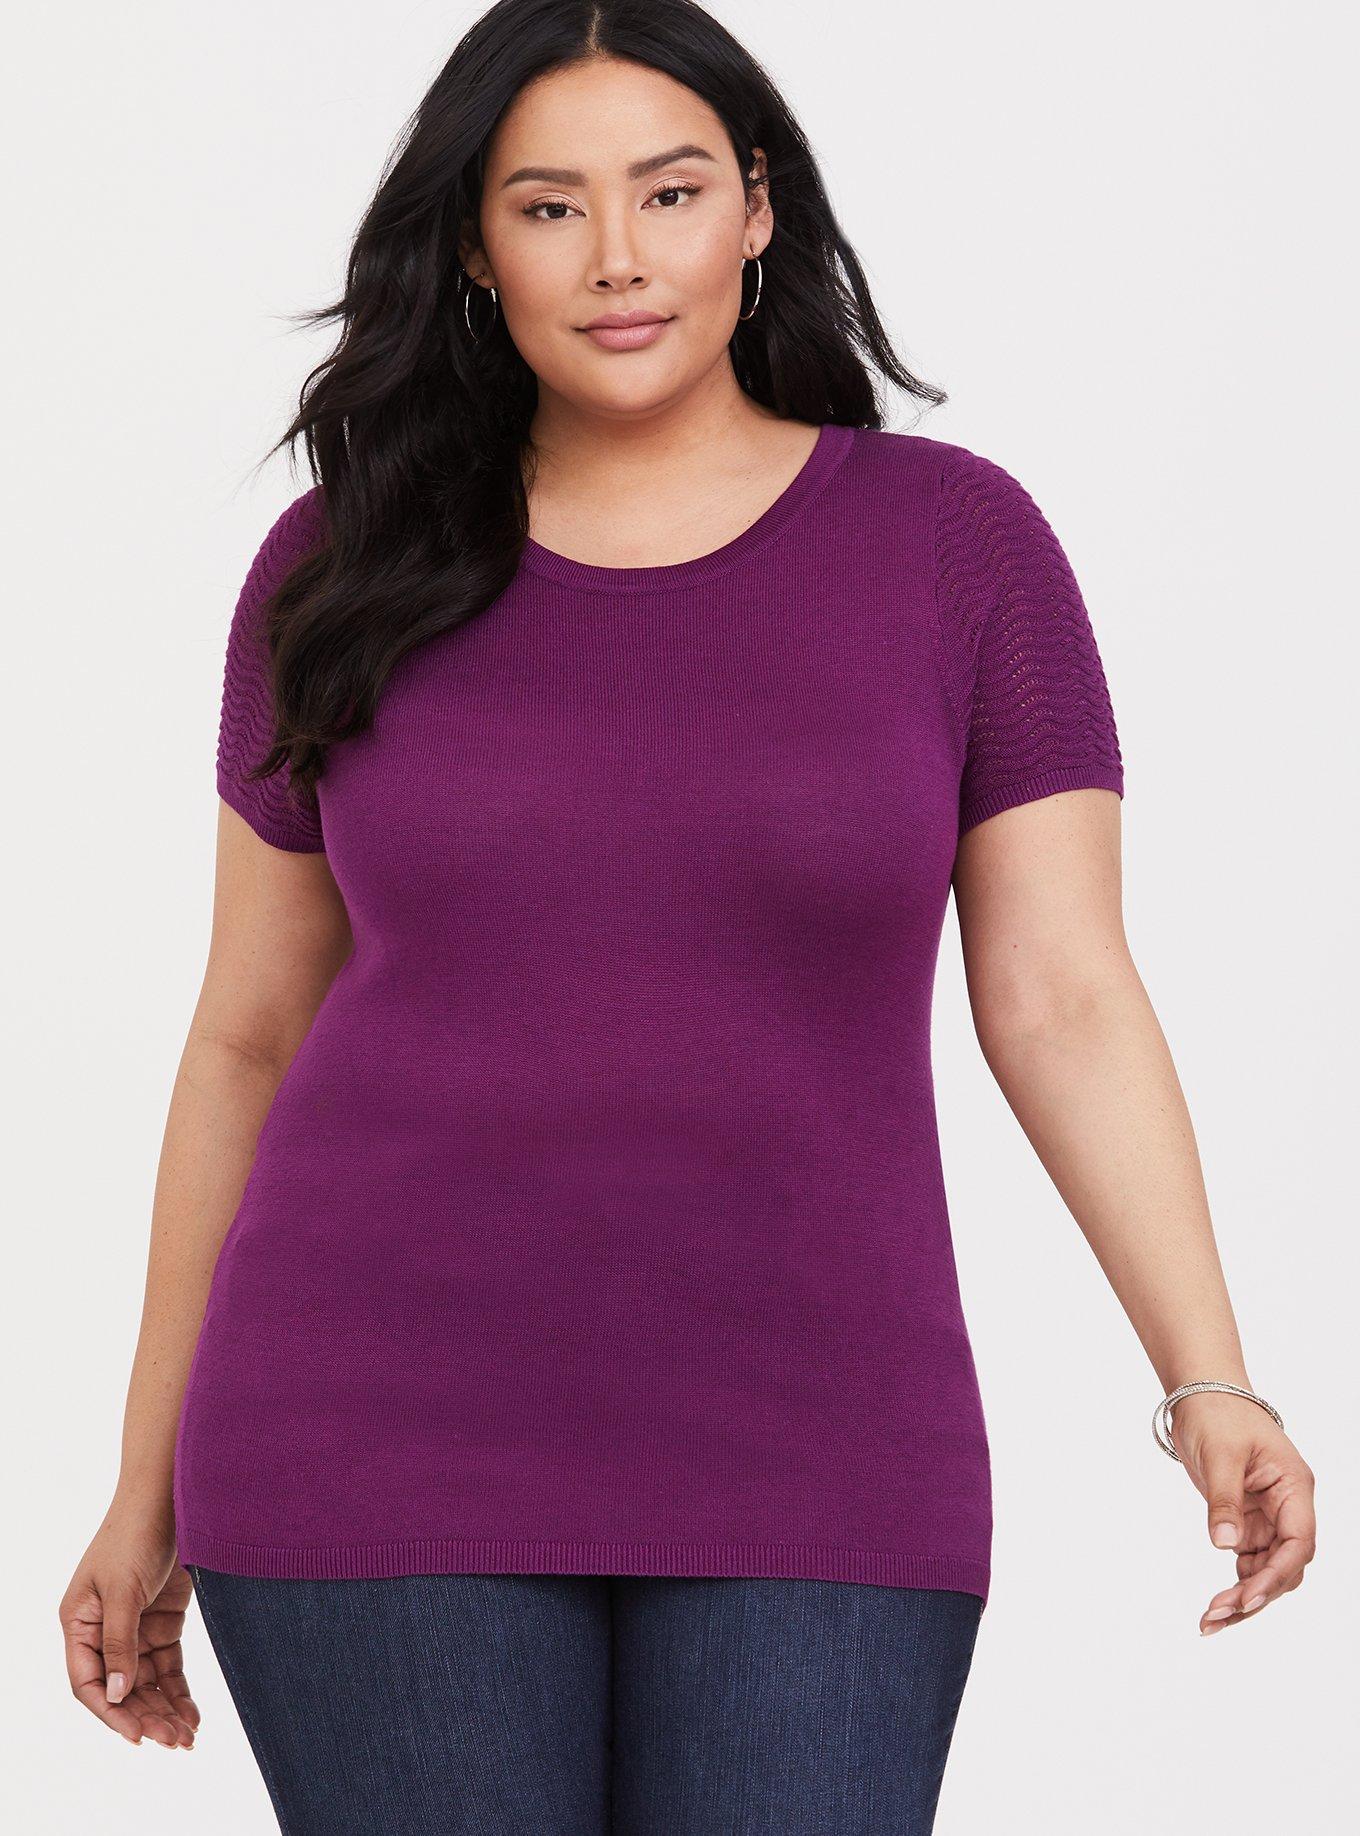 Plus Size - Berry Purple Pointelle Sweater-Knit Top - Torrid